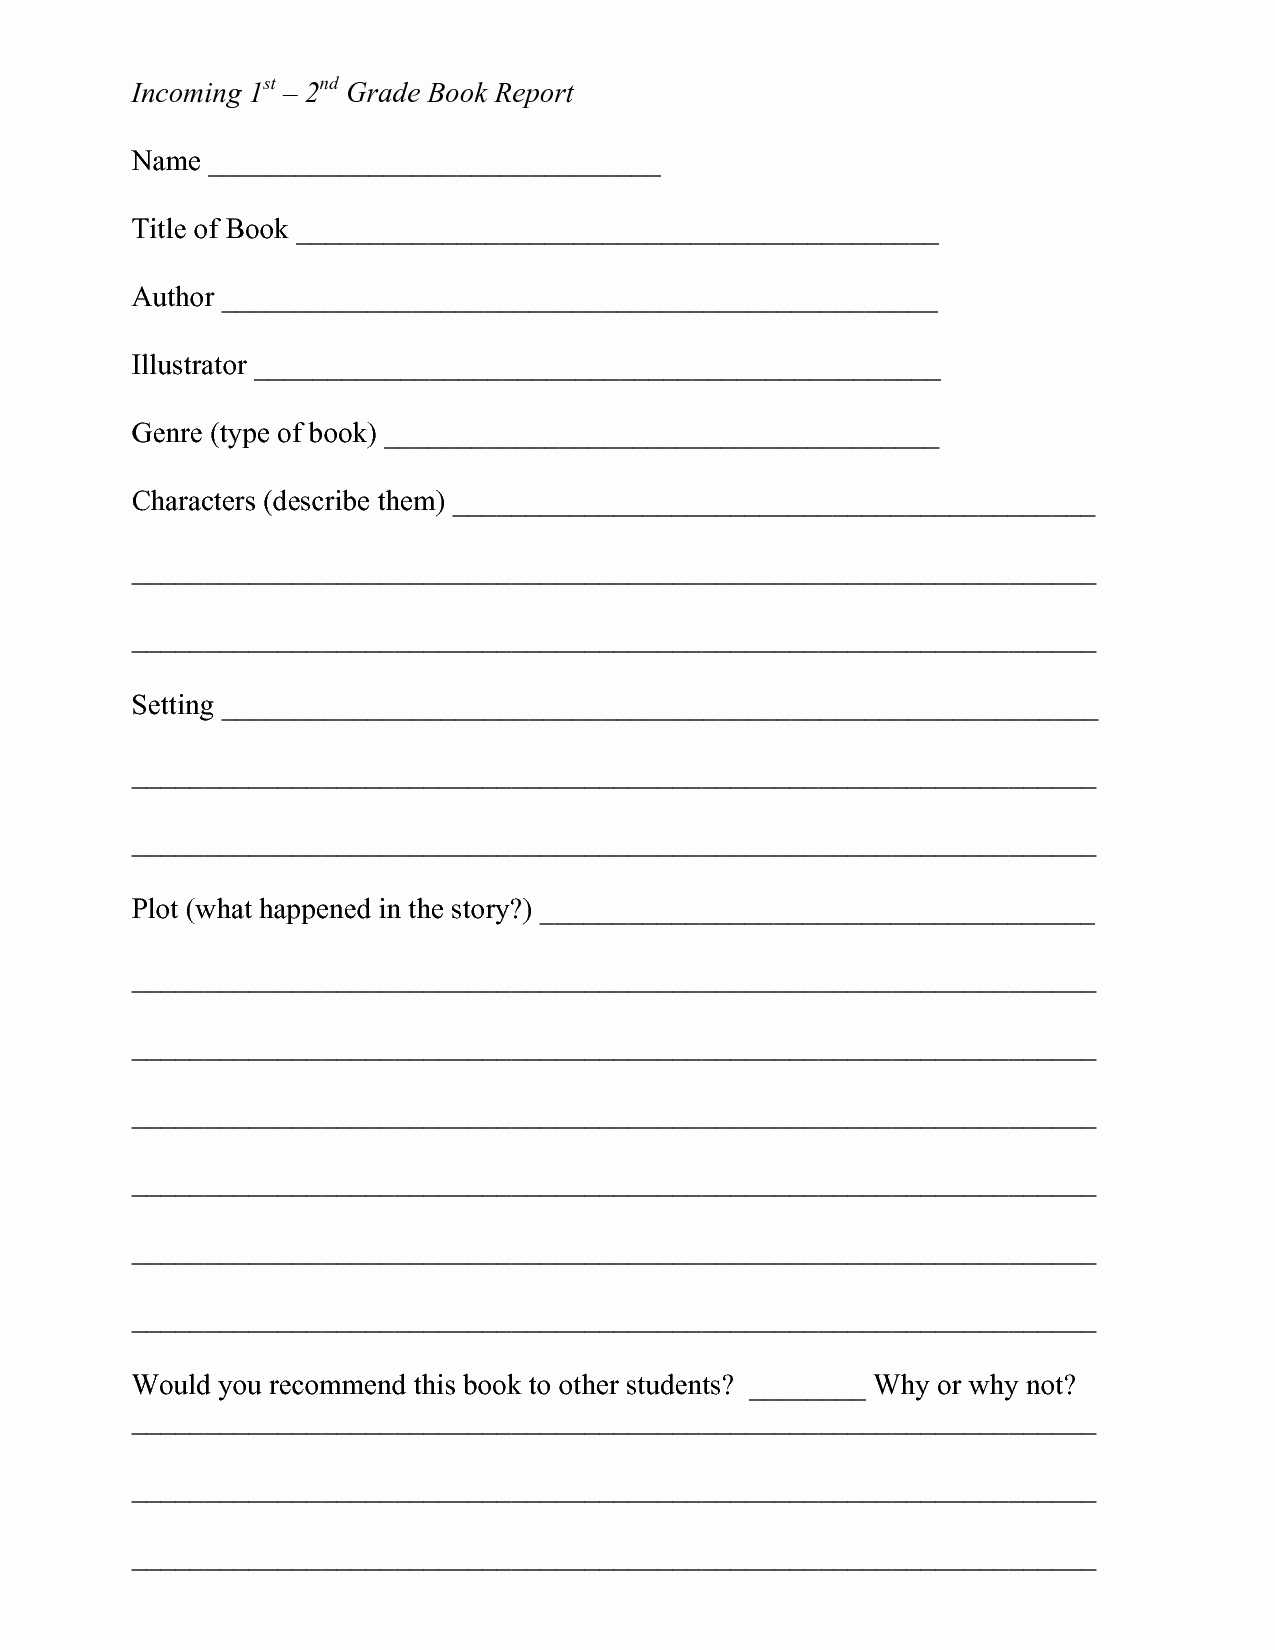 1St Grade Book Report Worksheets | Printable Worksheets And For 1St Grade Book Report Template